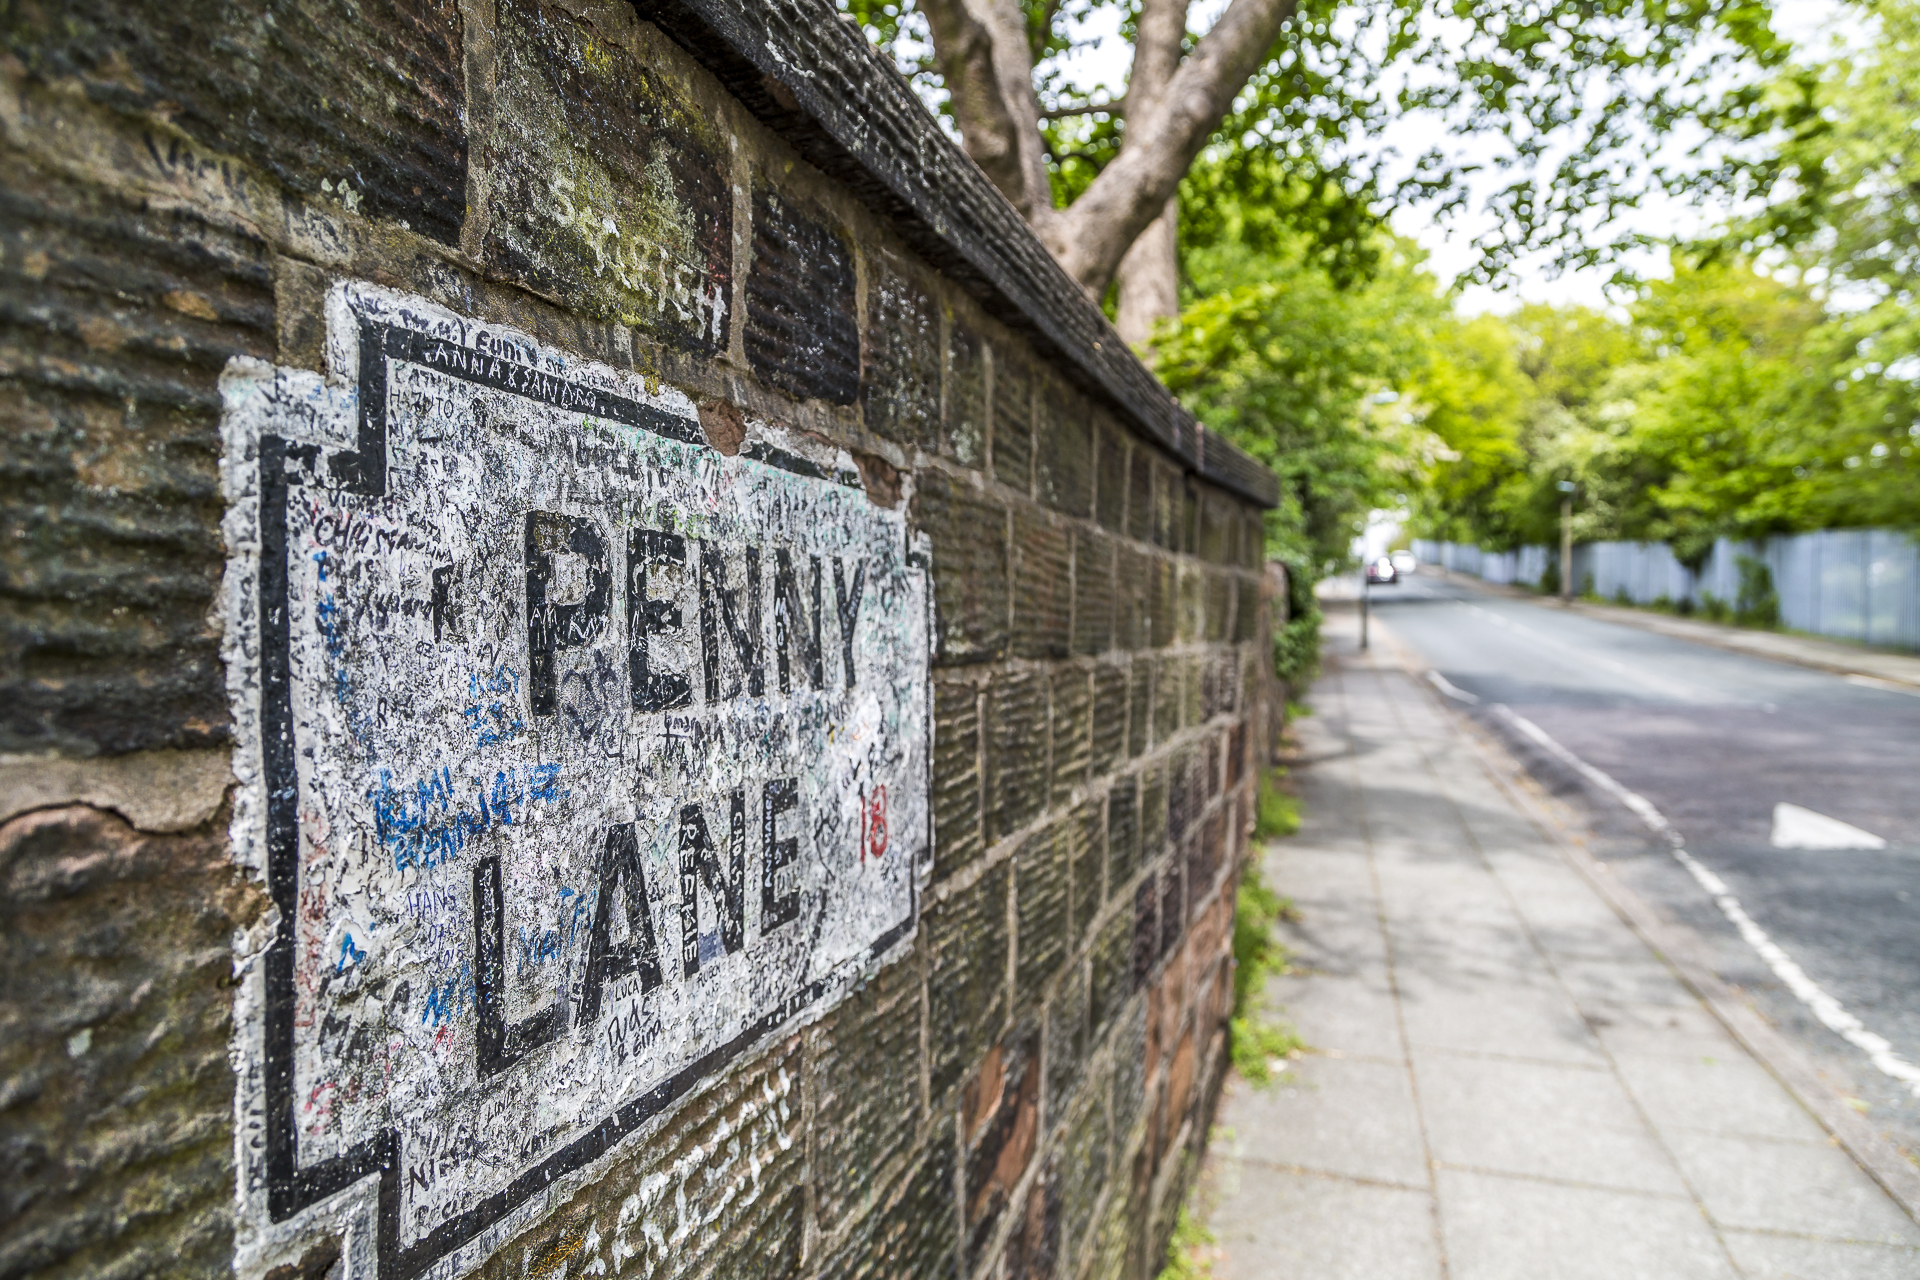 Penny-Lane-Liverpool